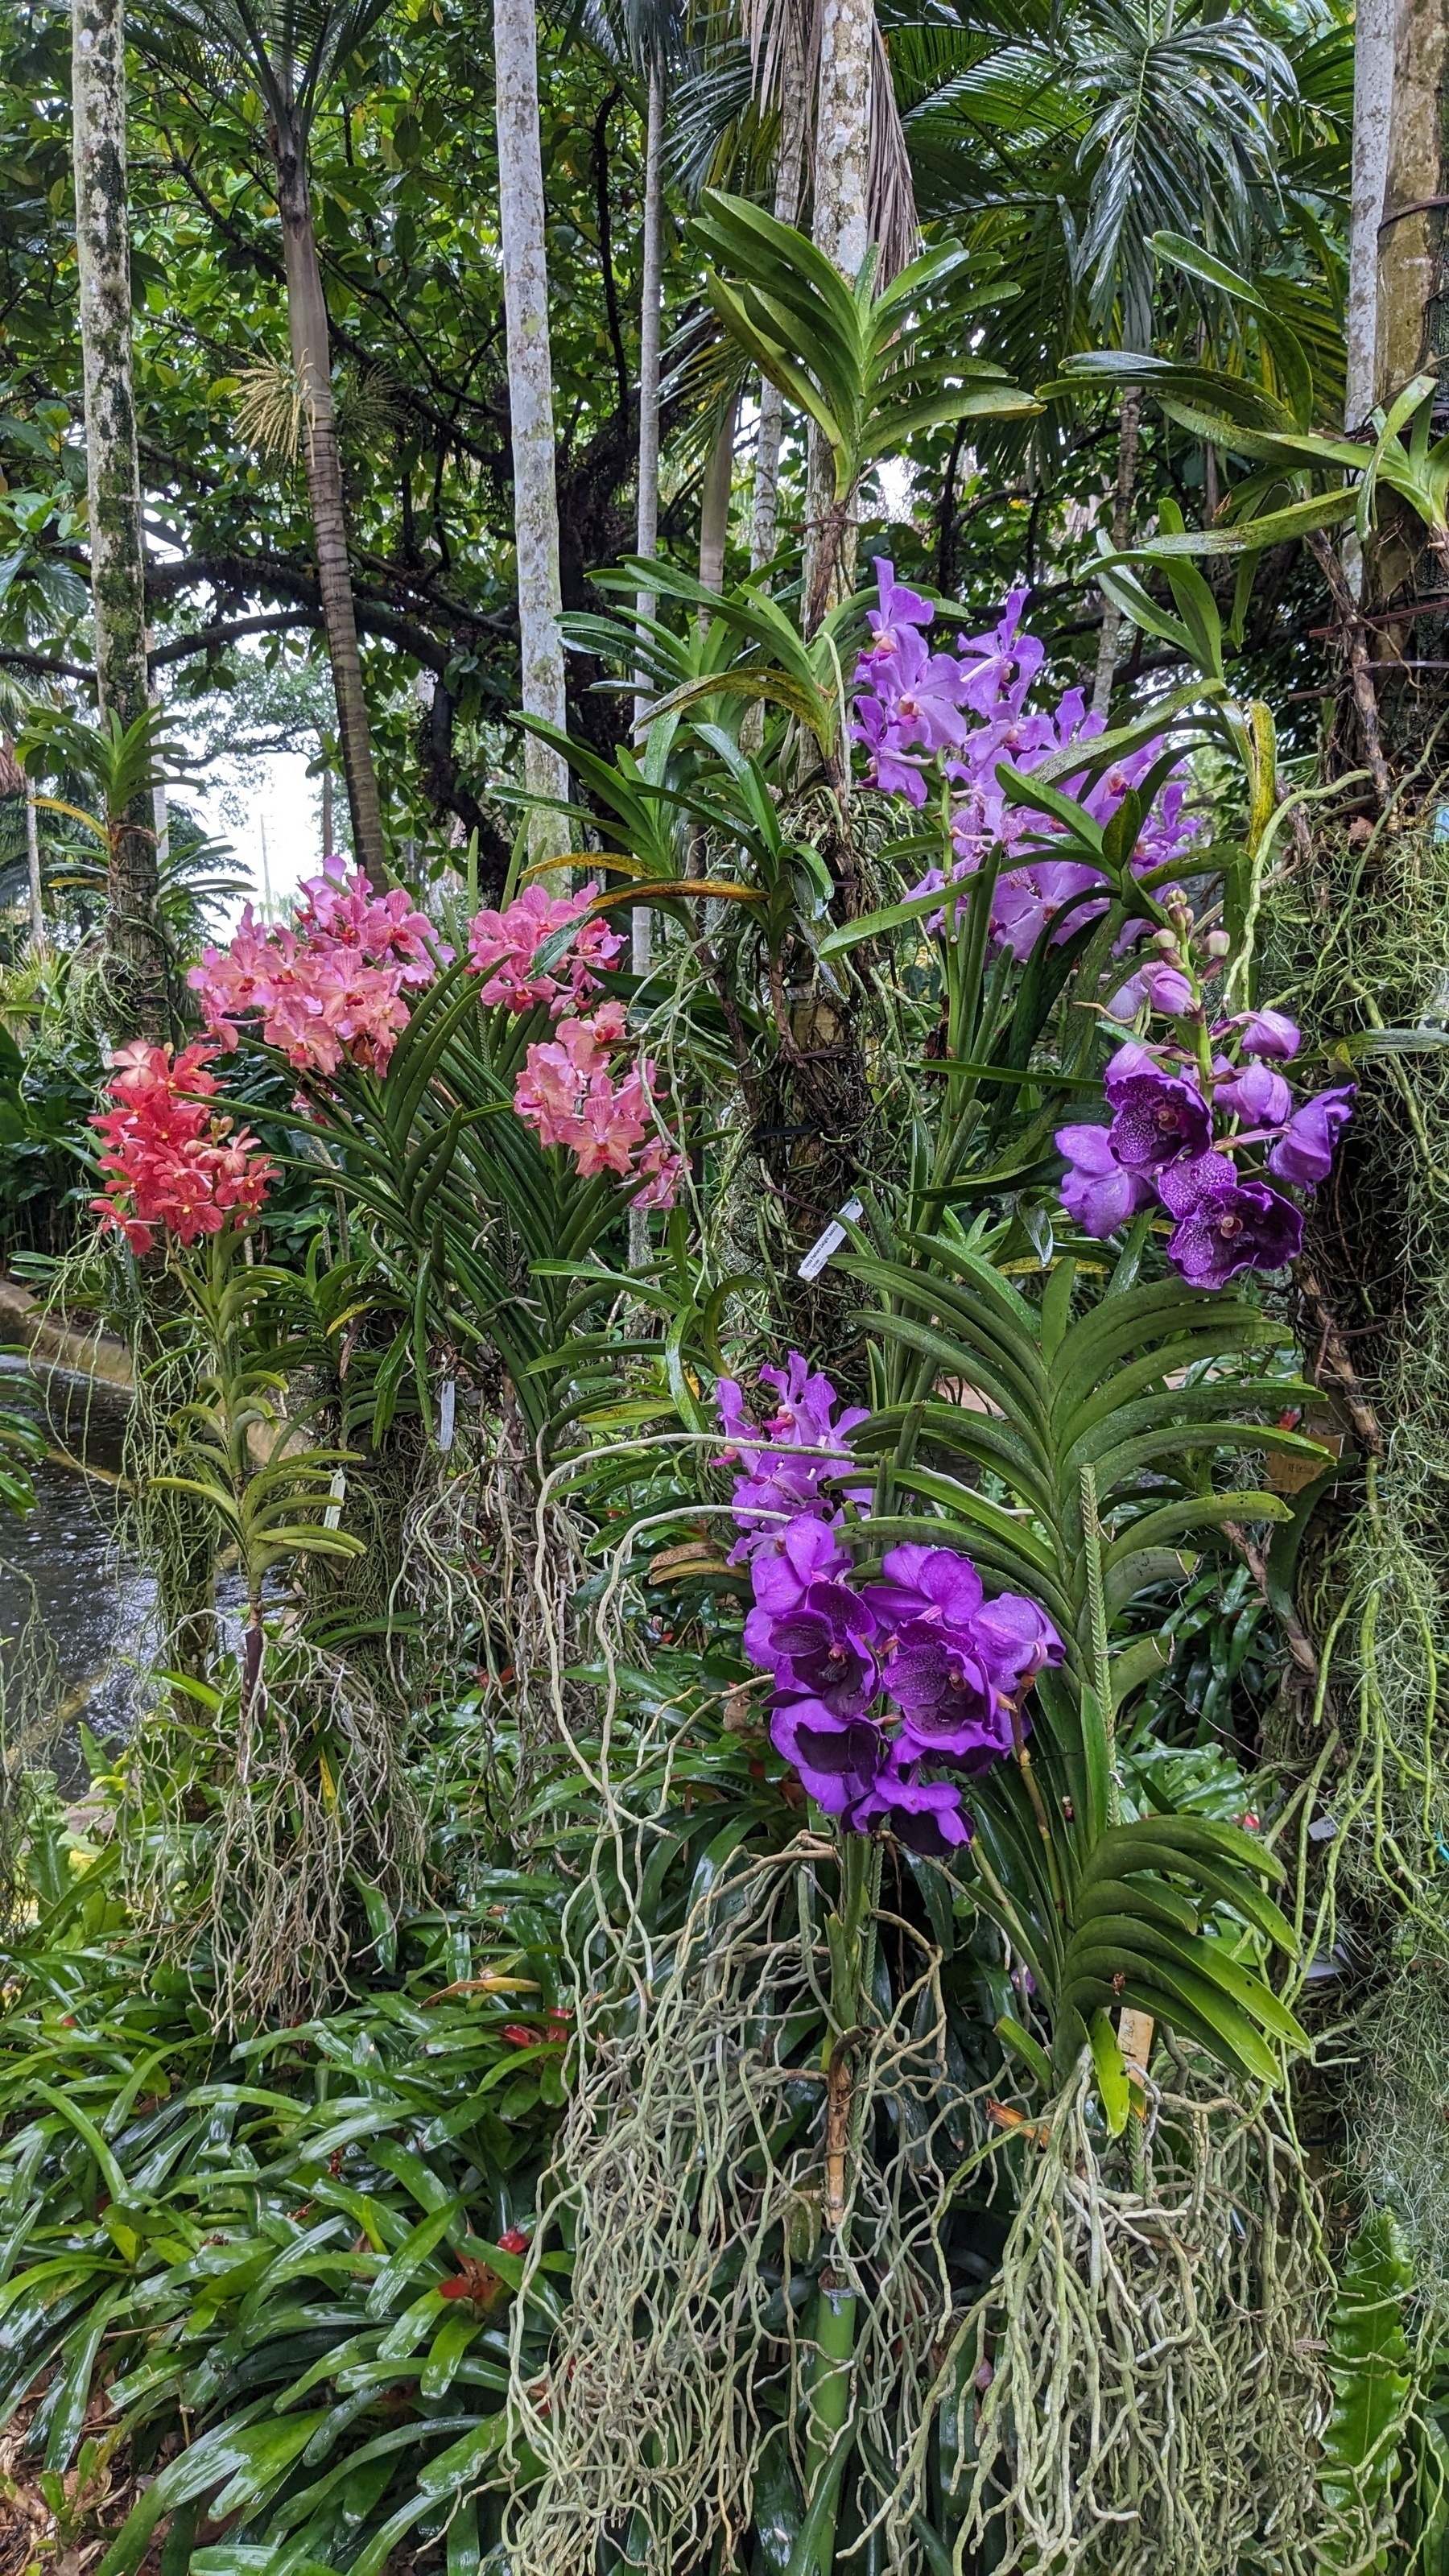 Vanda or Orchids on display at Flamingo Gardens. 